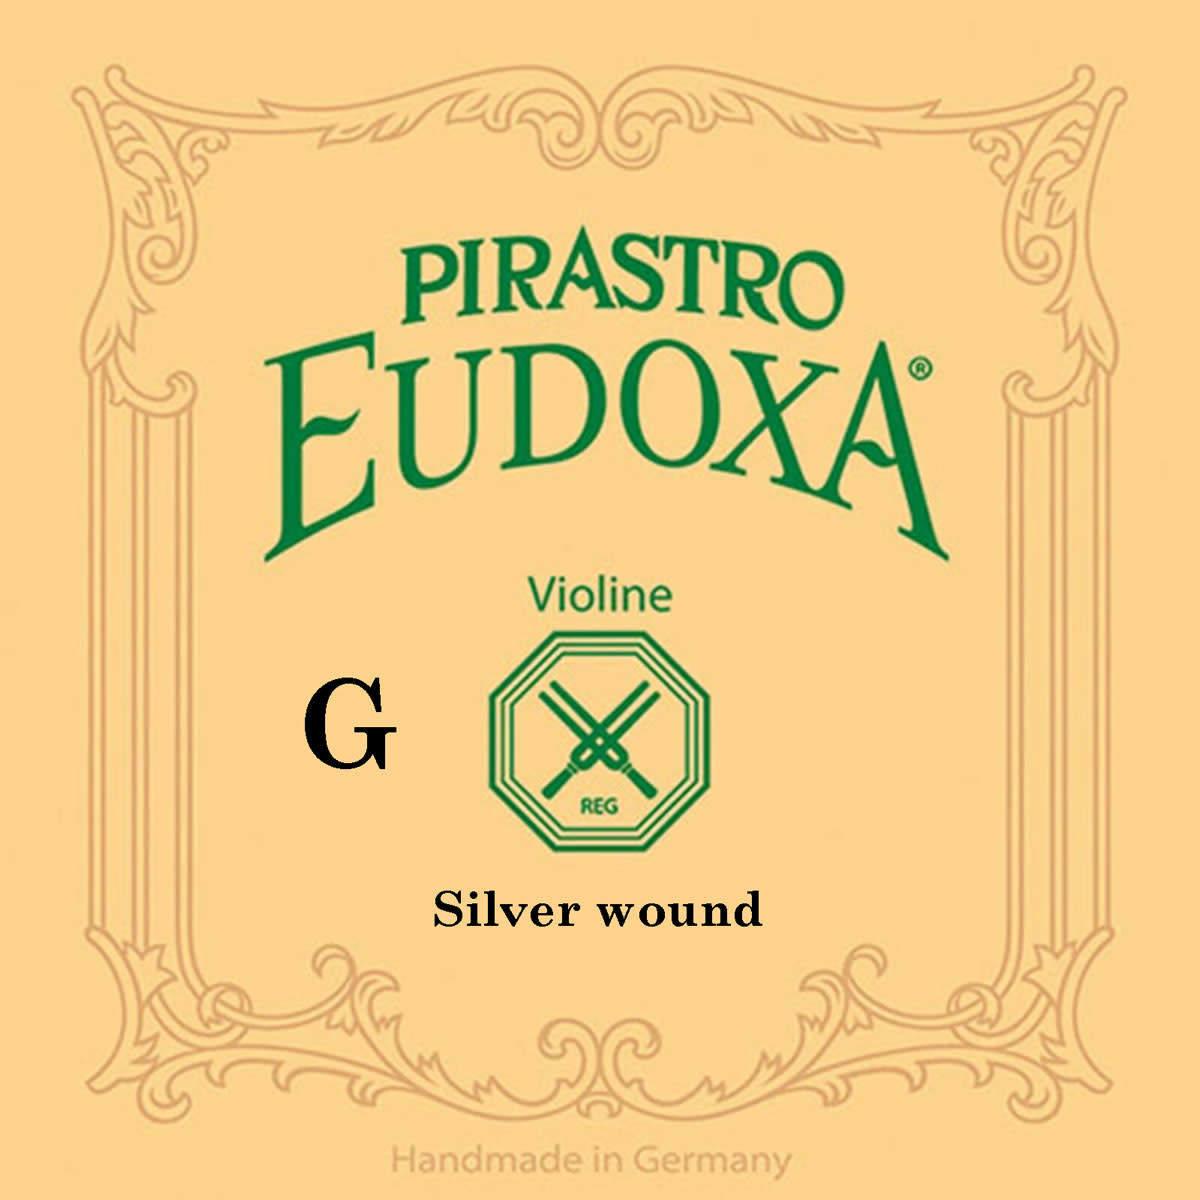 Pirastro Pirastro EUDOXA violin G string, silver wound on gut, 15 3/4, in envelope